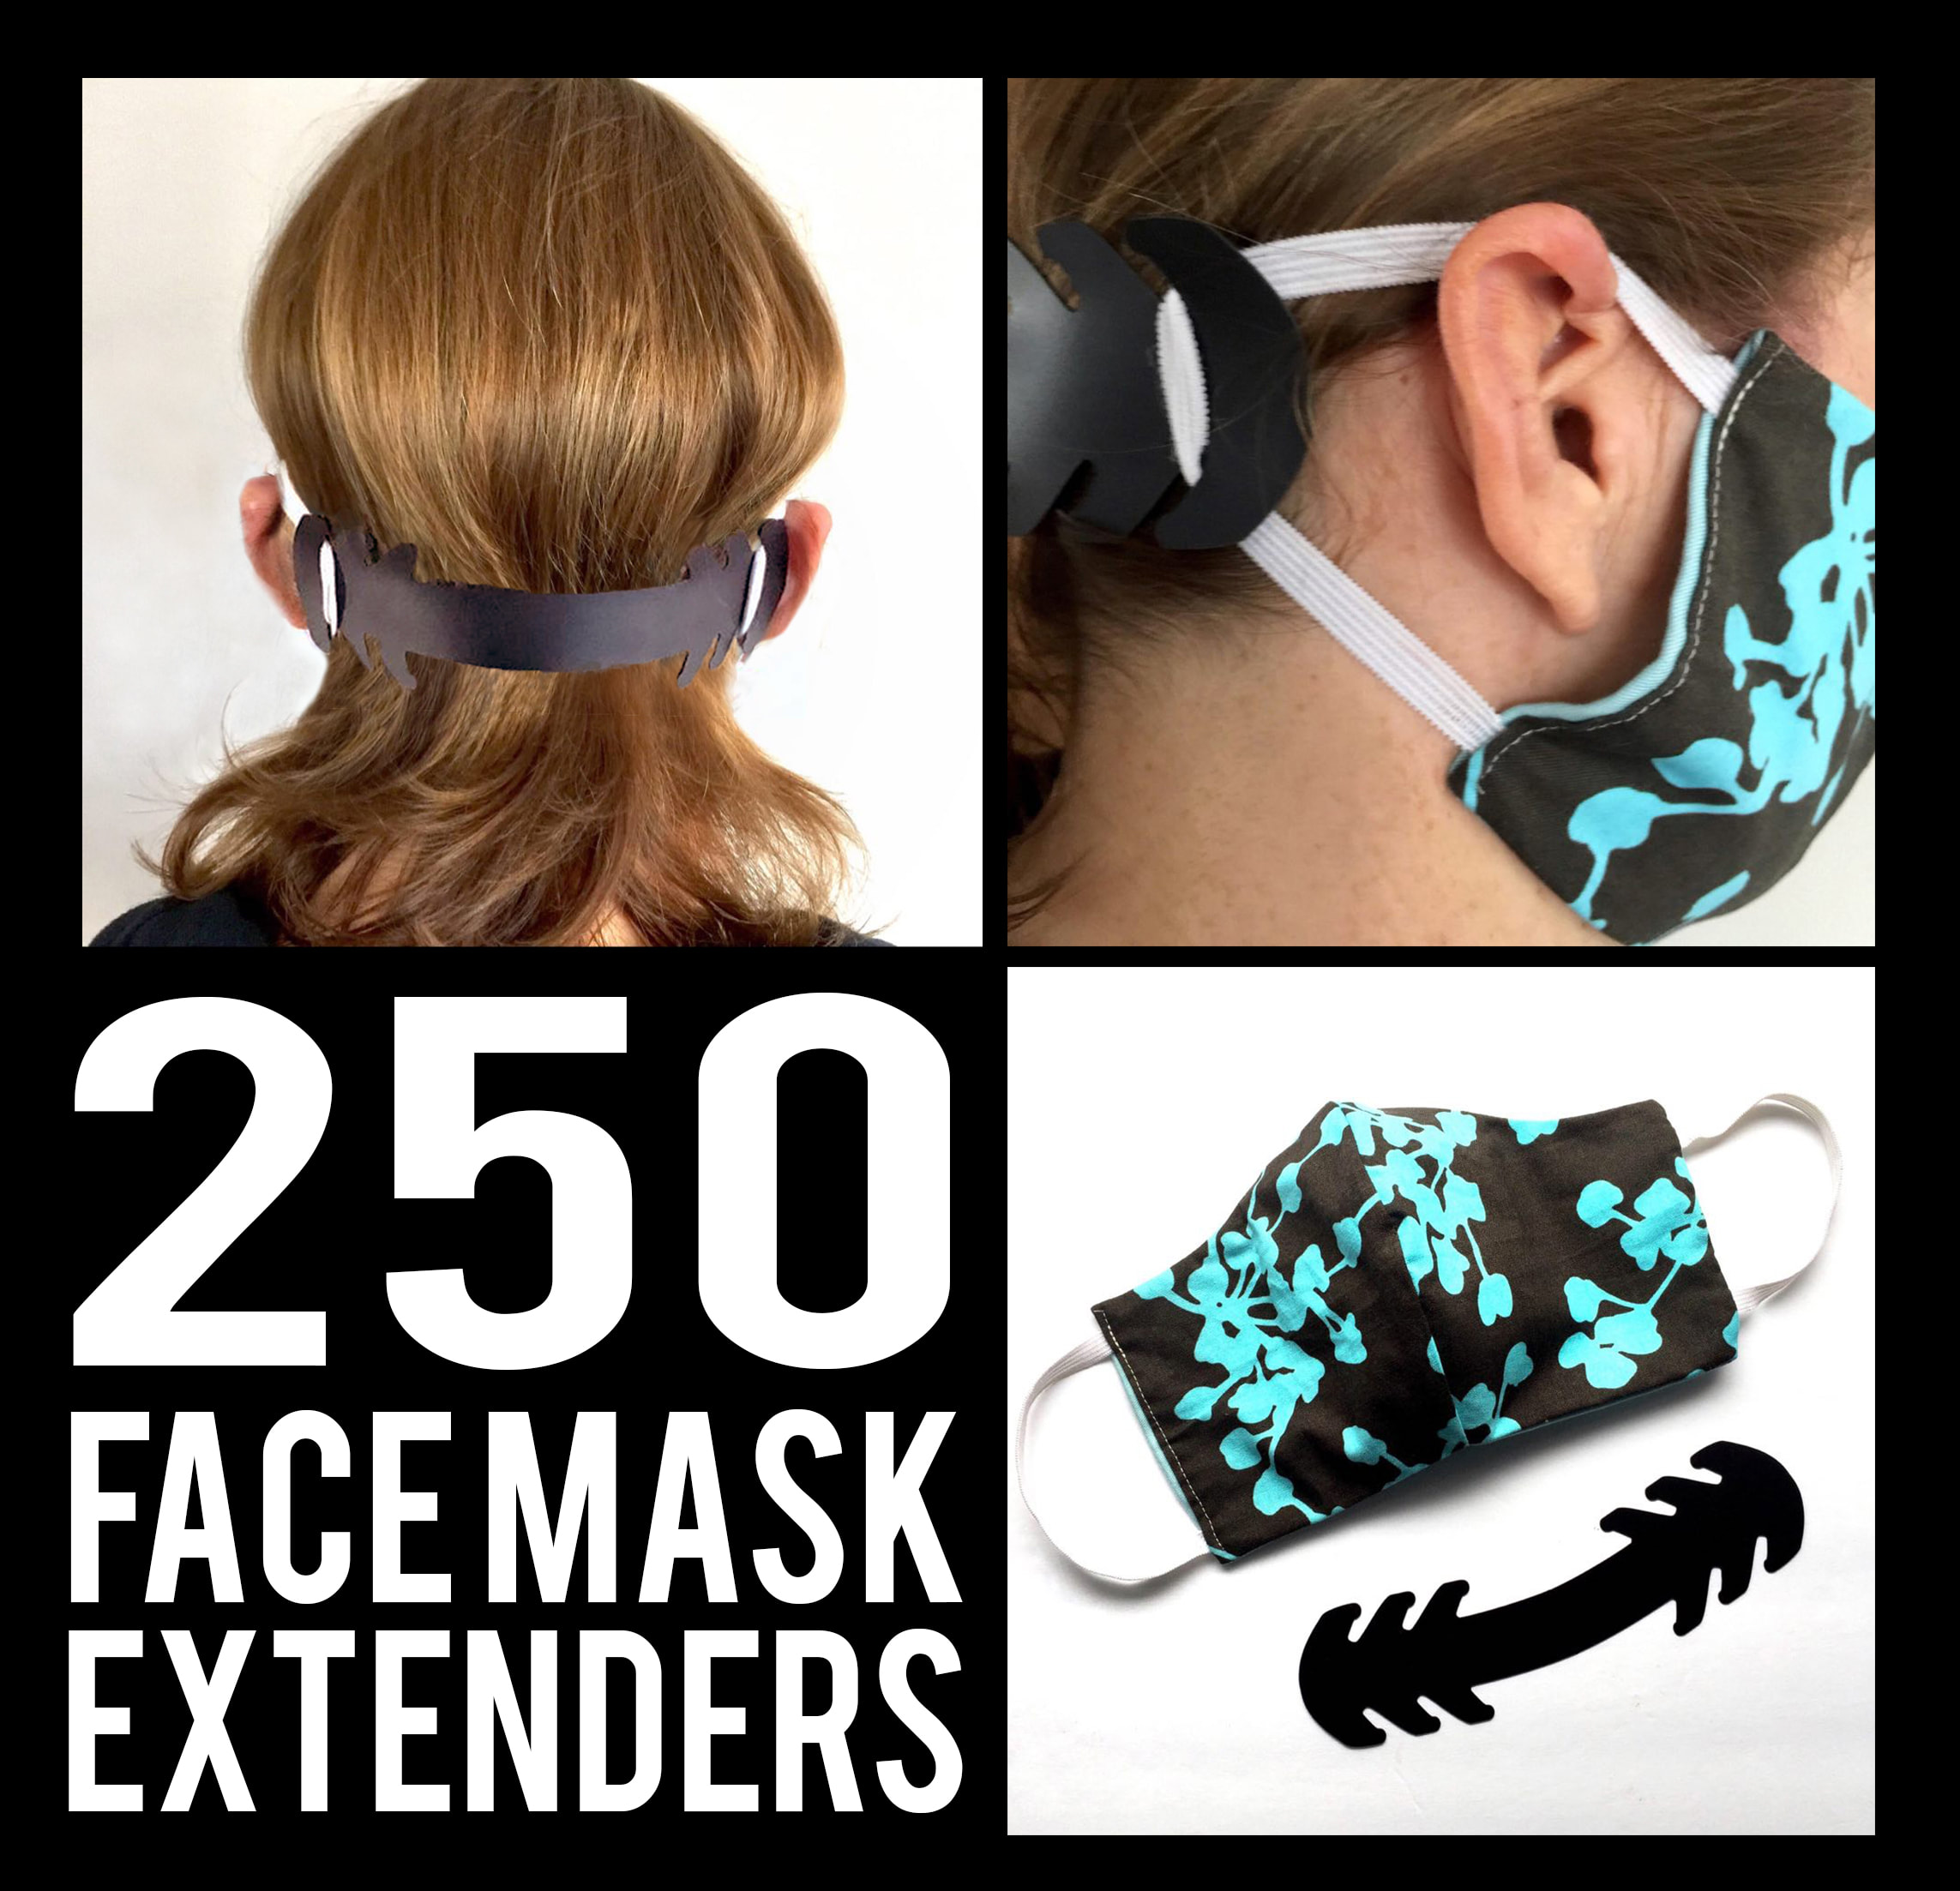  VELCRO Brand Face Mask Extender Straps 4pk Light Blue, 12” x 1”  Comfortable and Adjustable Ear Savers, VEL-30692-USA : Health & Household